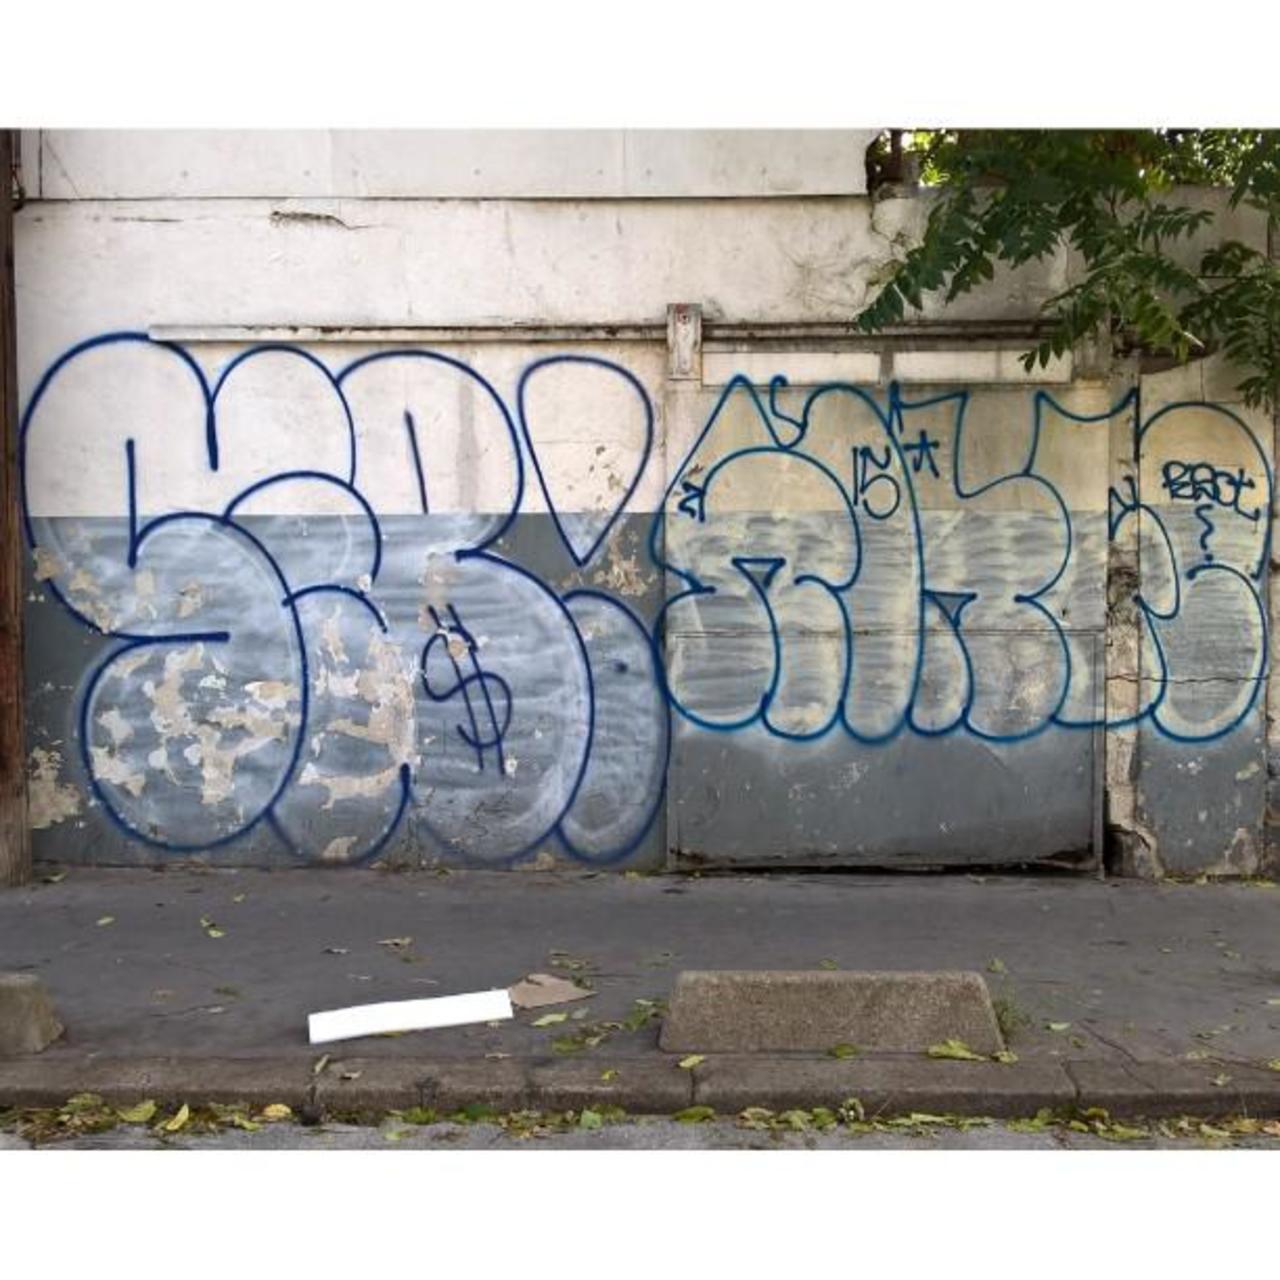 #Paris #graffiti photo by @maxdimontemarciano http://ift.tt/1jq3WYG #StreetArt http://t.co/JWuILOwEBa